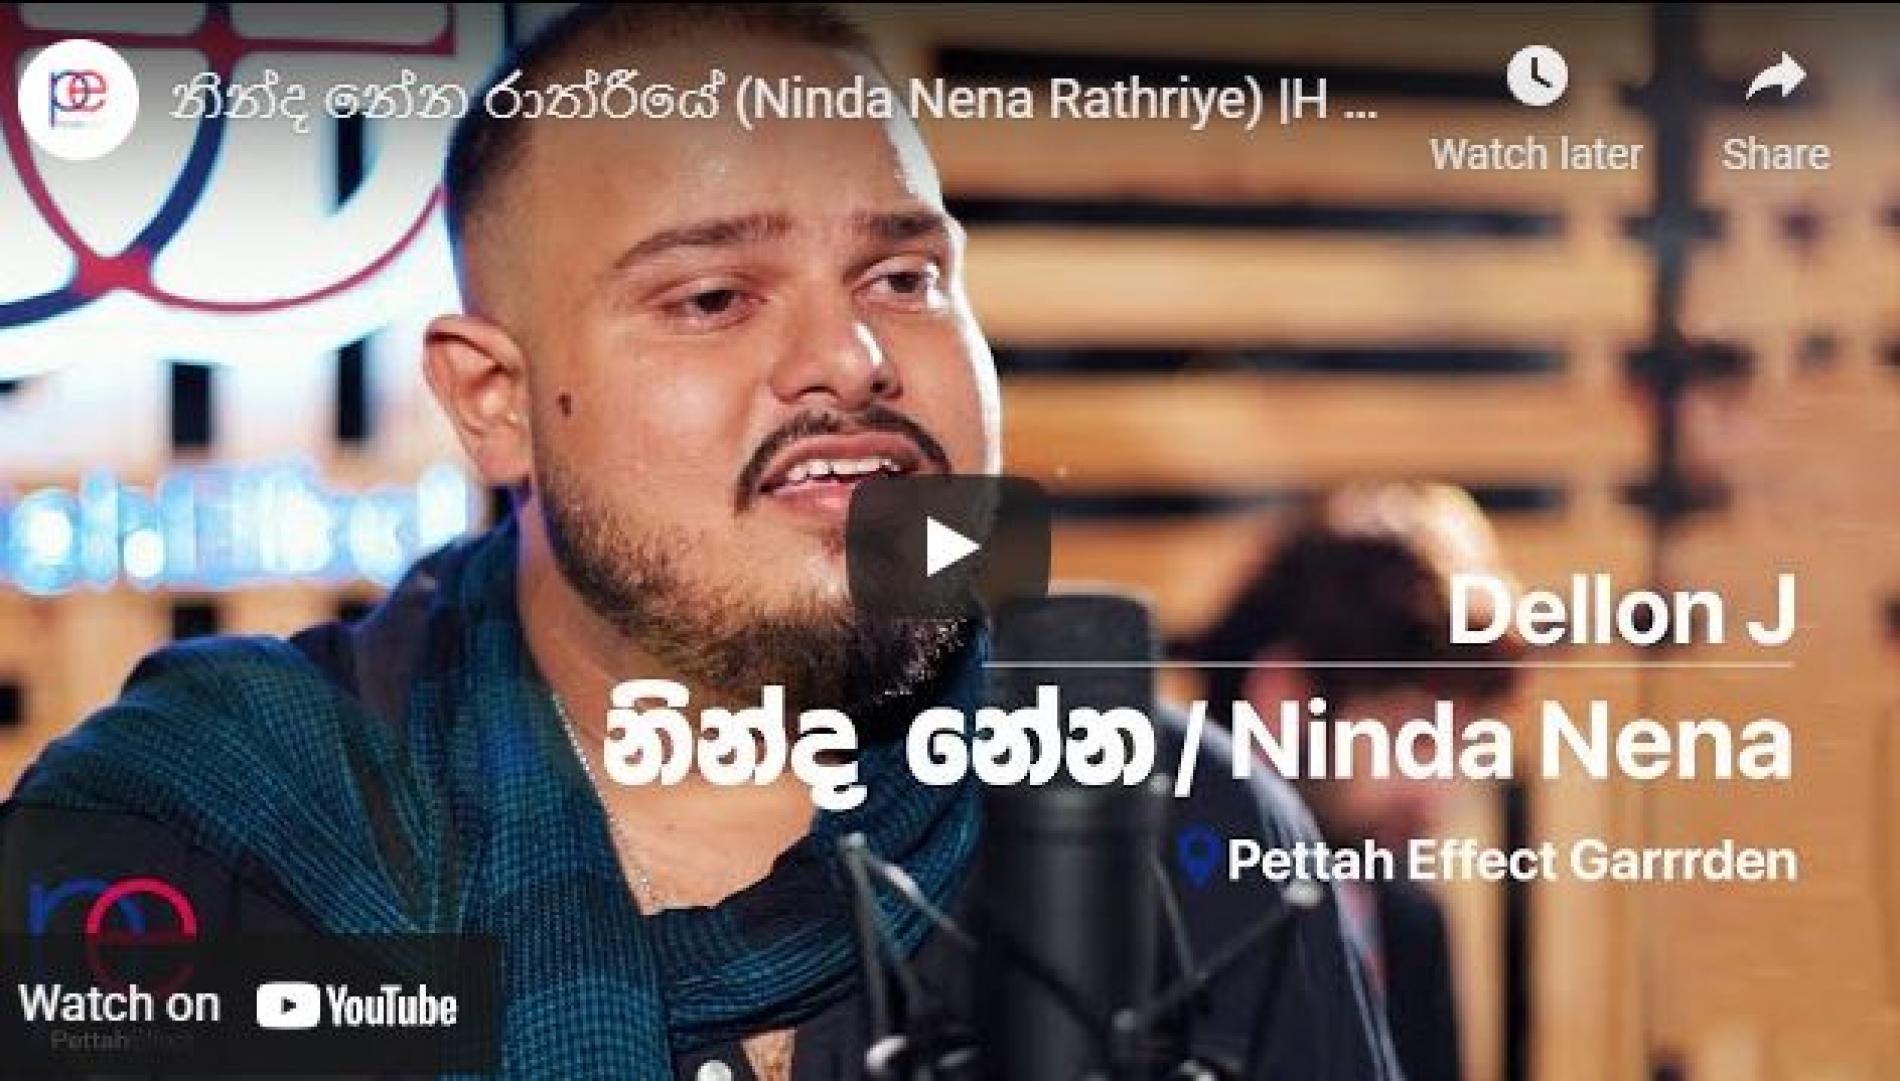 New Music : නින්ද නේන රාත්රීයේ (Ninda Nena Rathriye) |H R Jothipala (Cover) |Dellon J